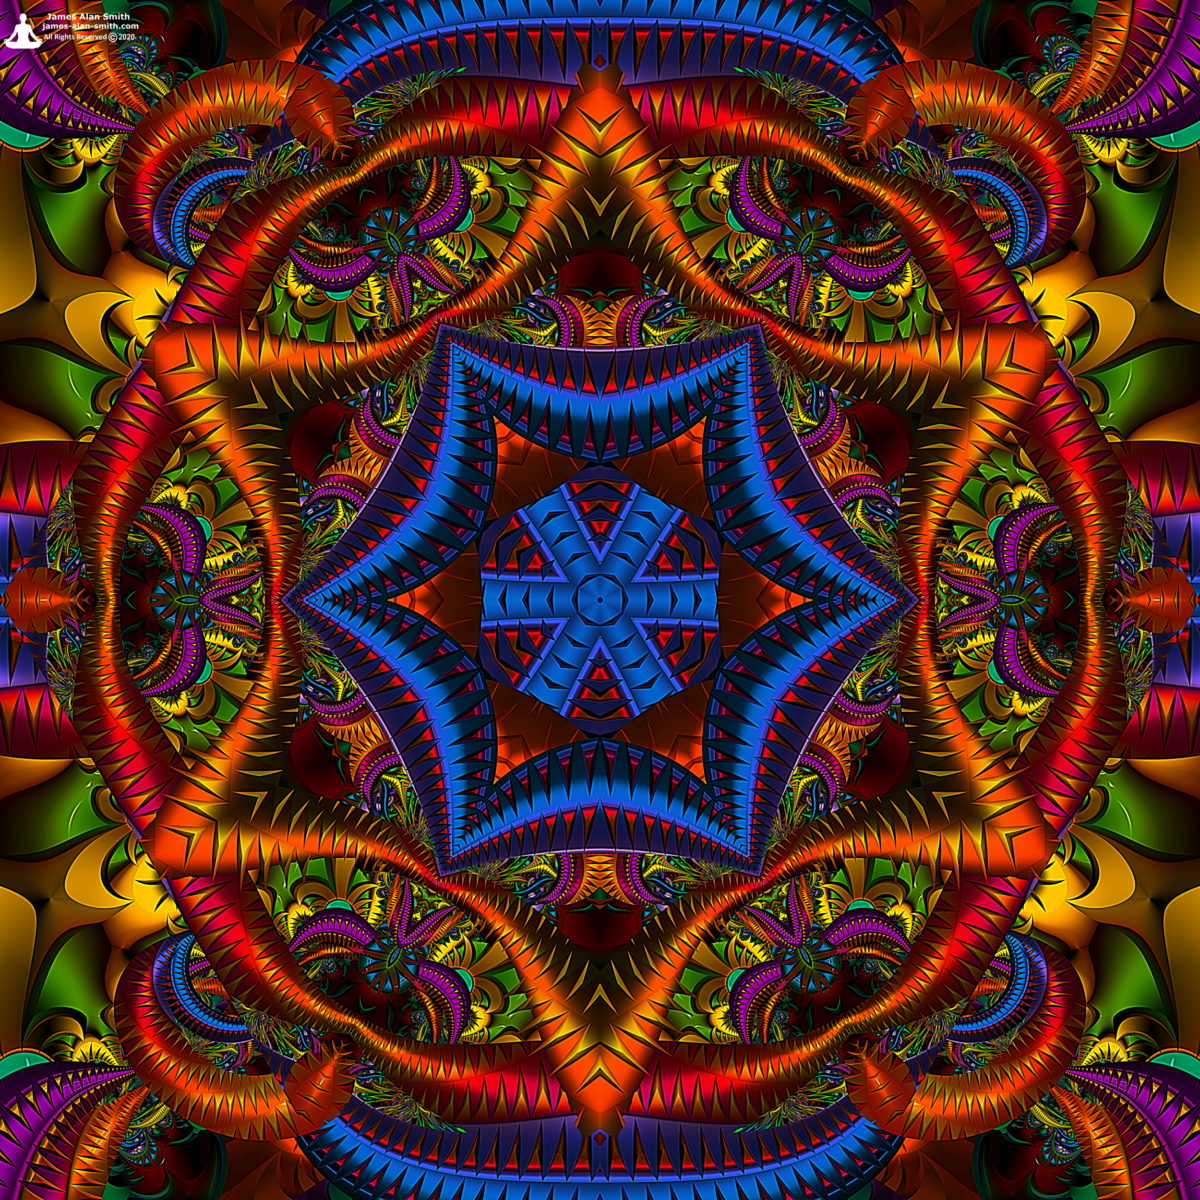 Unusual Mandala Series #01152020: Artwork by James Alan Smith